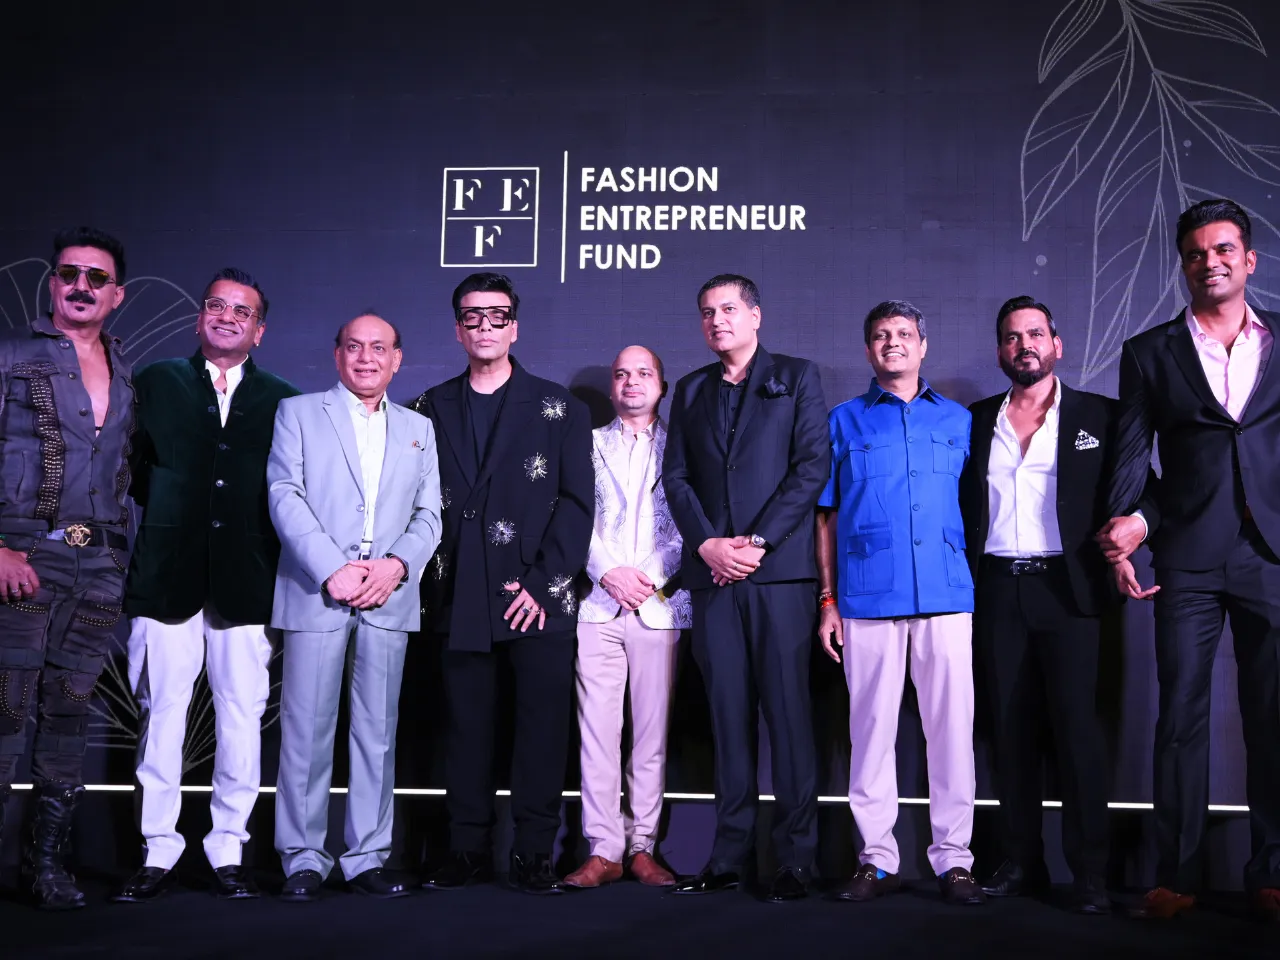 India Fashion Awards unveils Fashion Entrepreneur Fund website